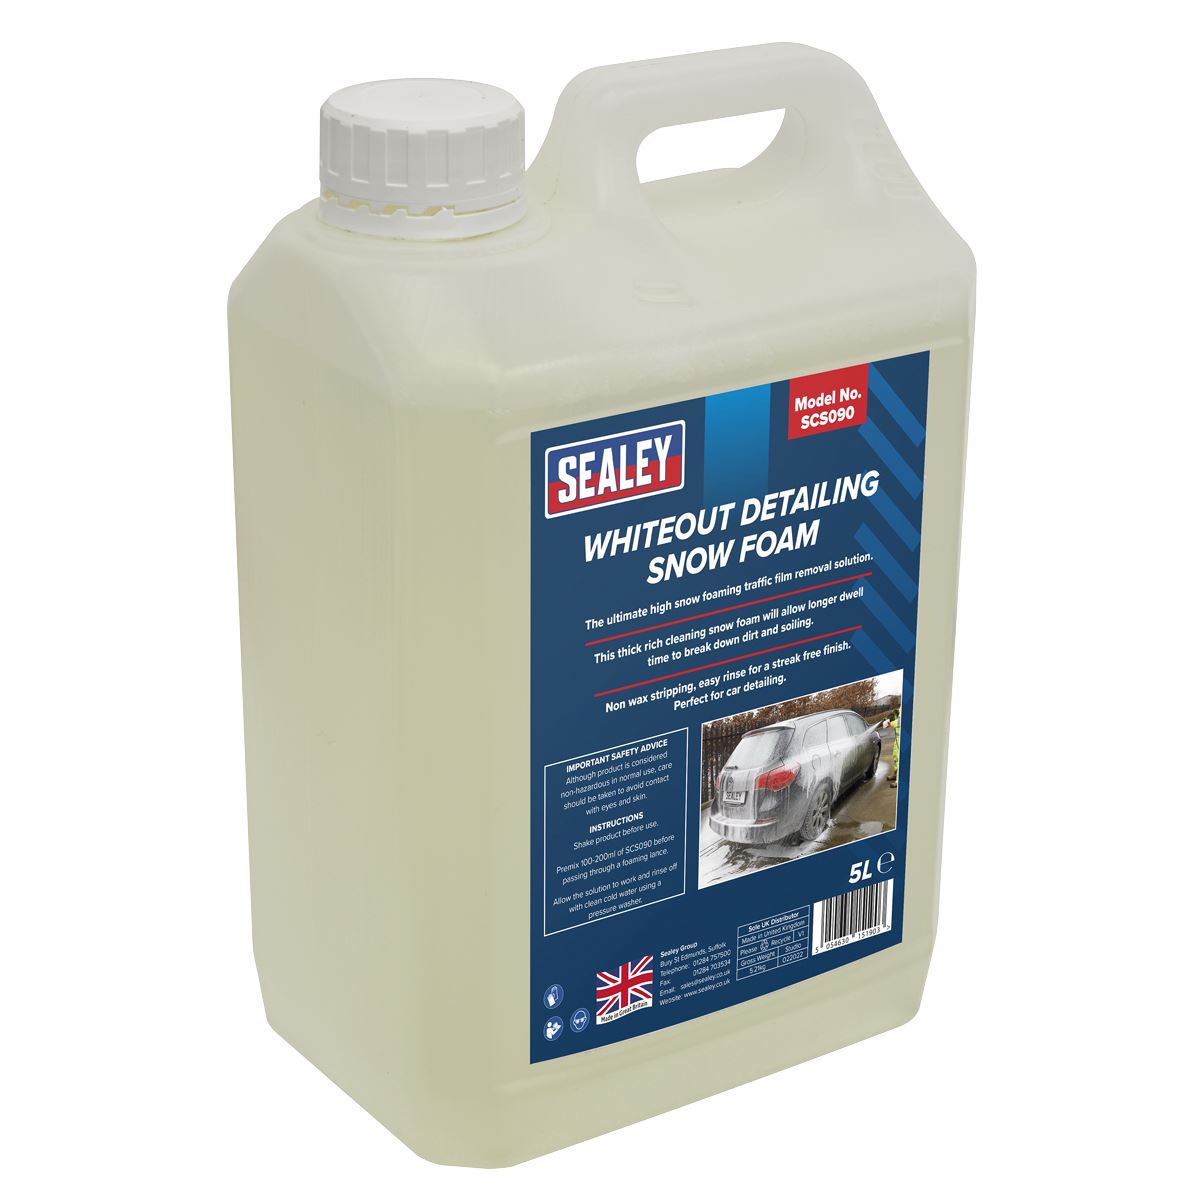 Sealey Pressure Washer 130bar 420L/hr with Snow Foam